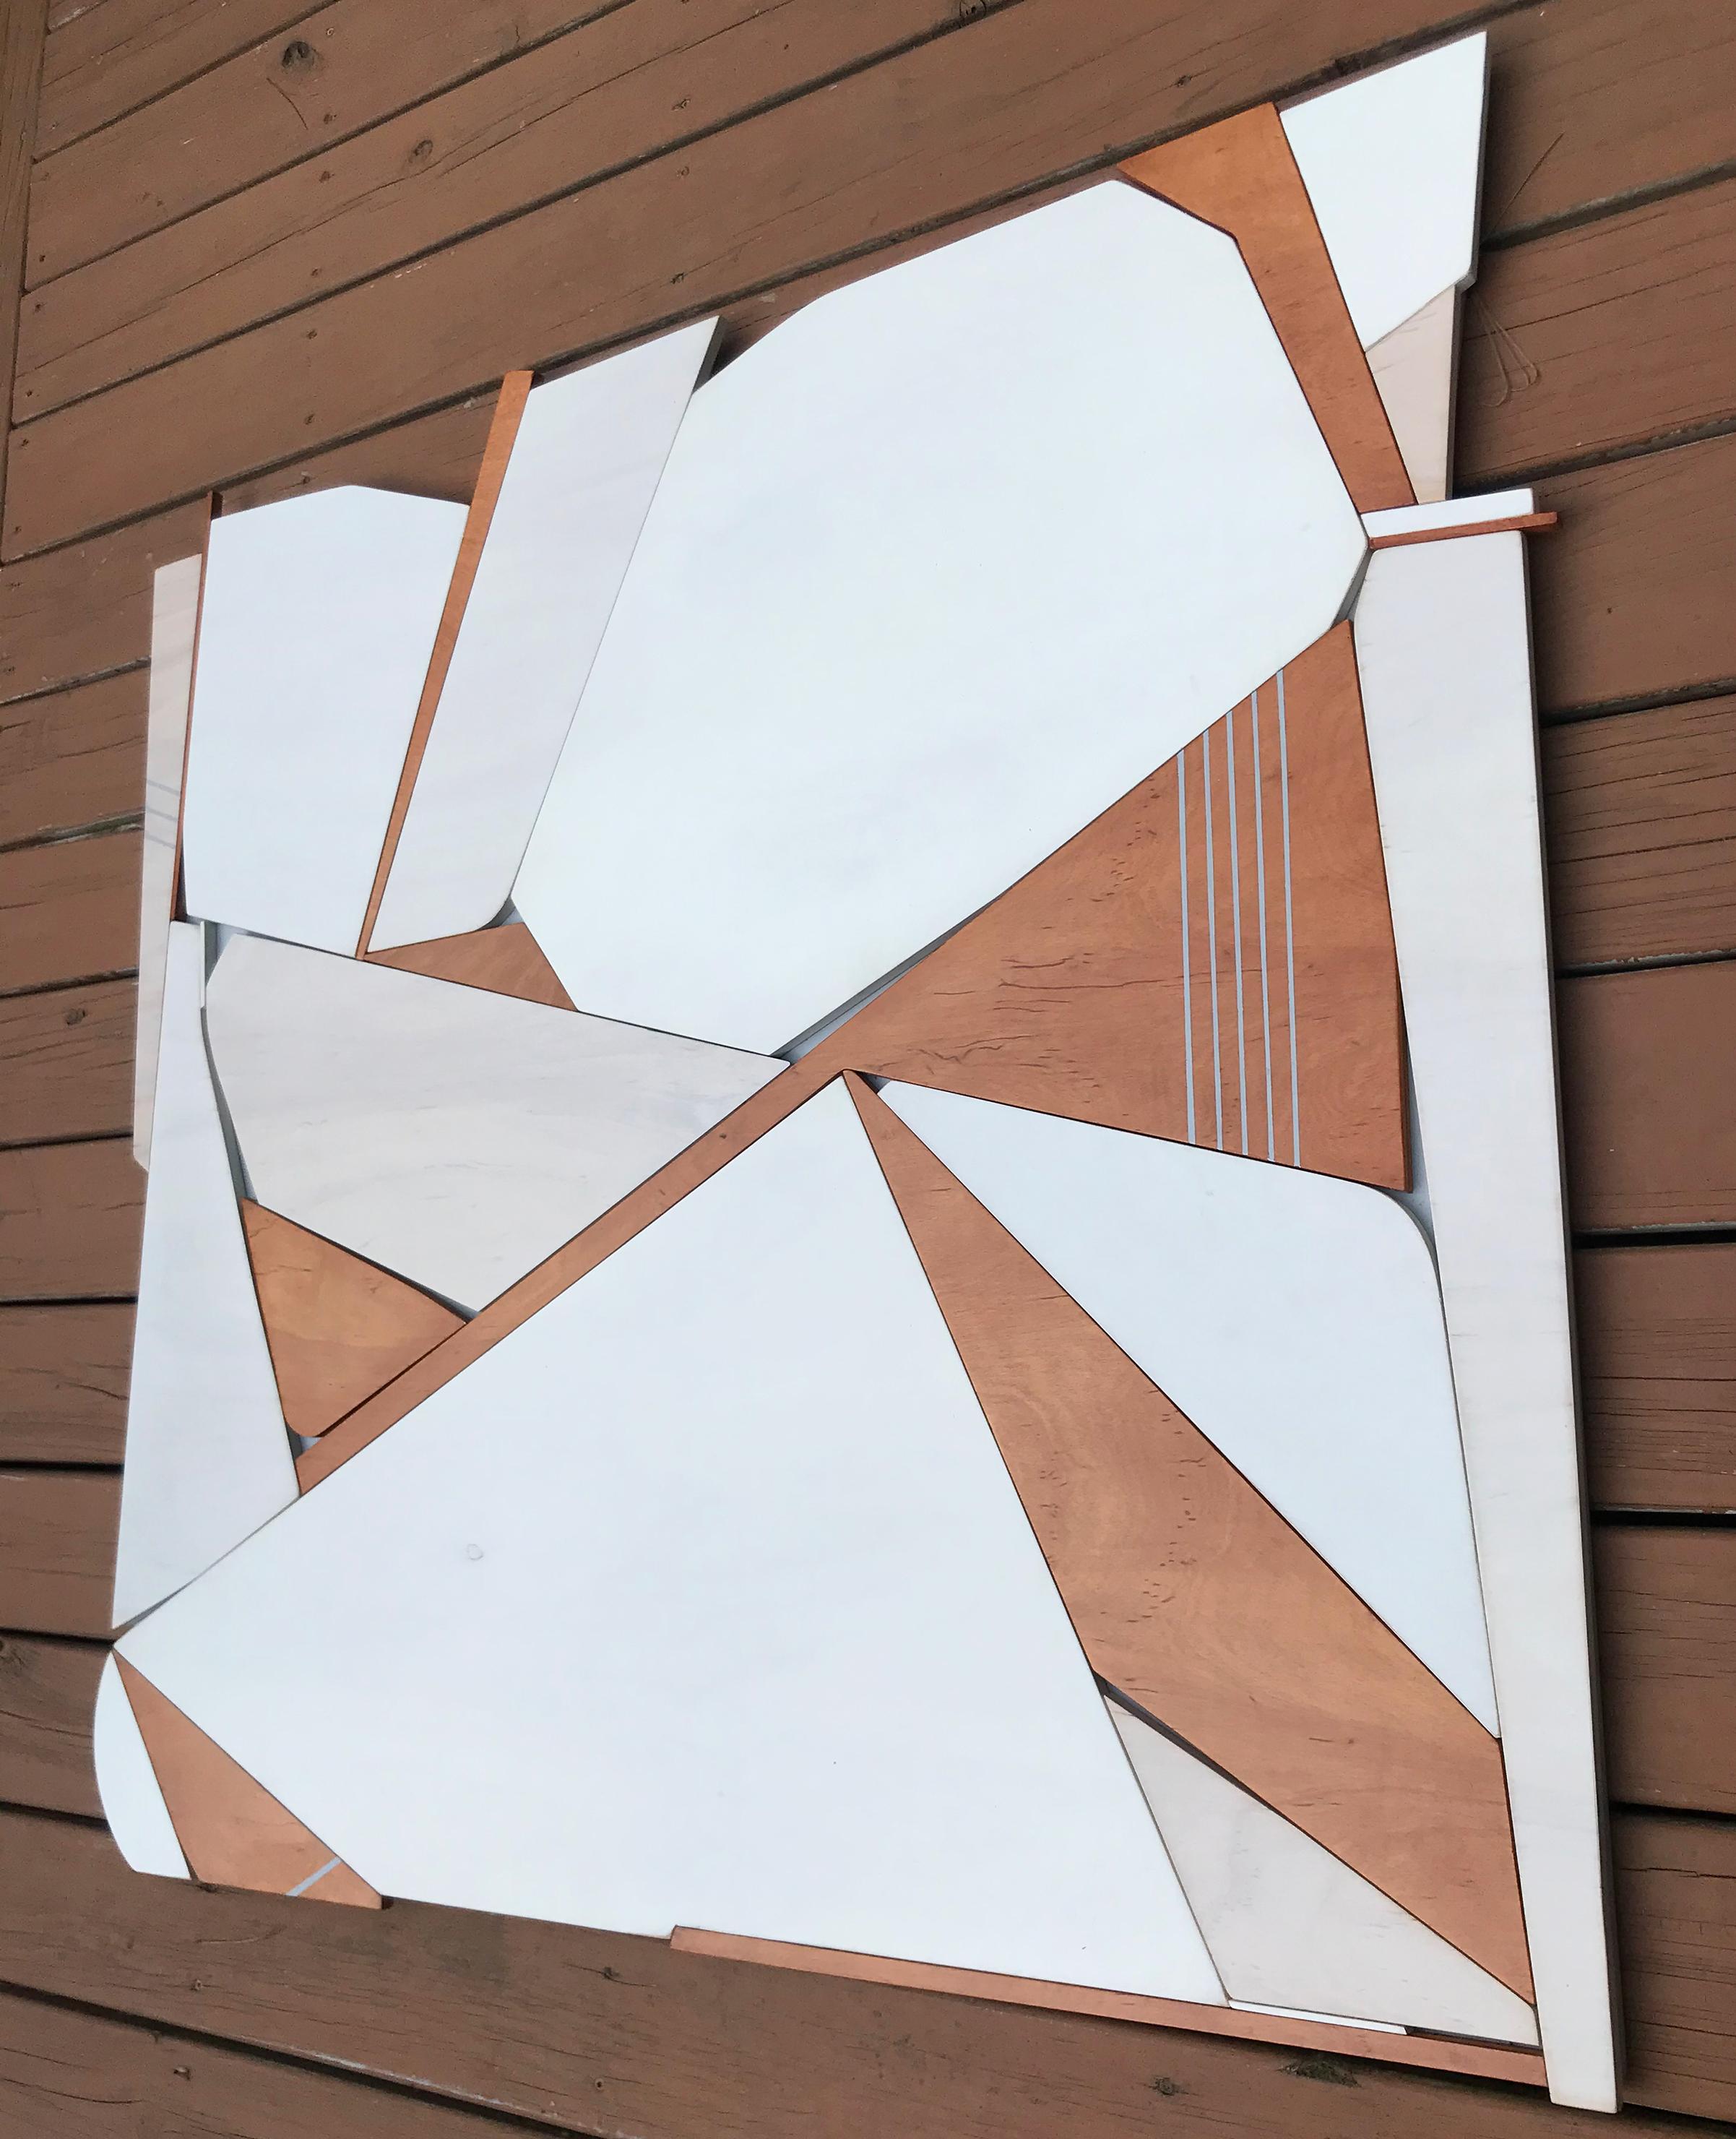 Sparrow (white modern wood wall sculpture, off-white, abstract geometric art) - Abstract Geometric Sculpture by Scott Troxel